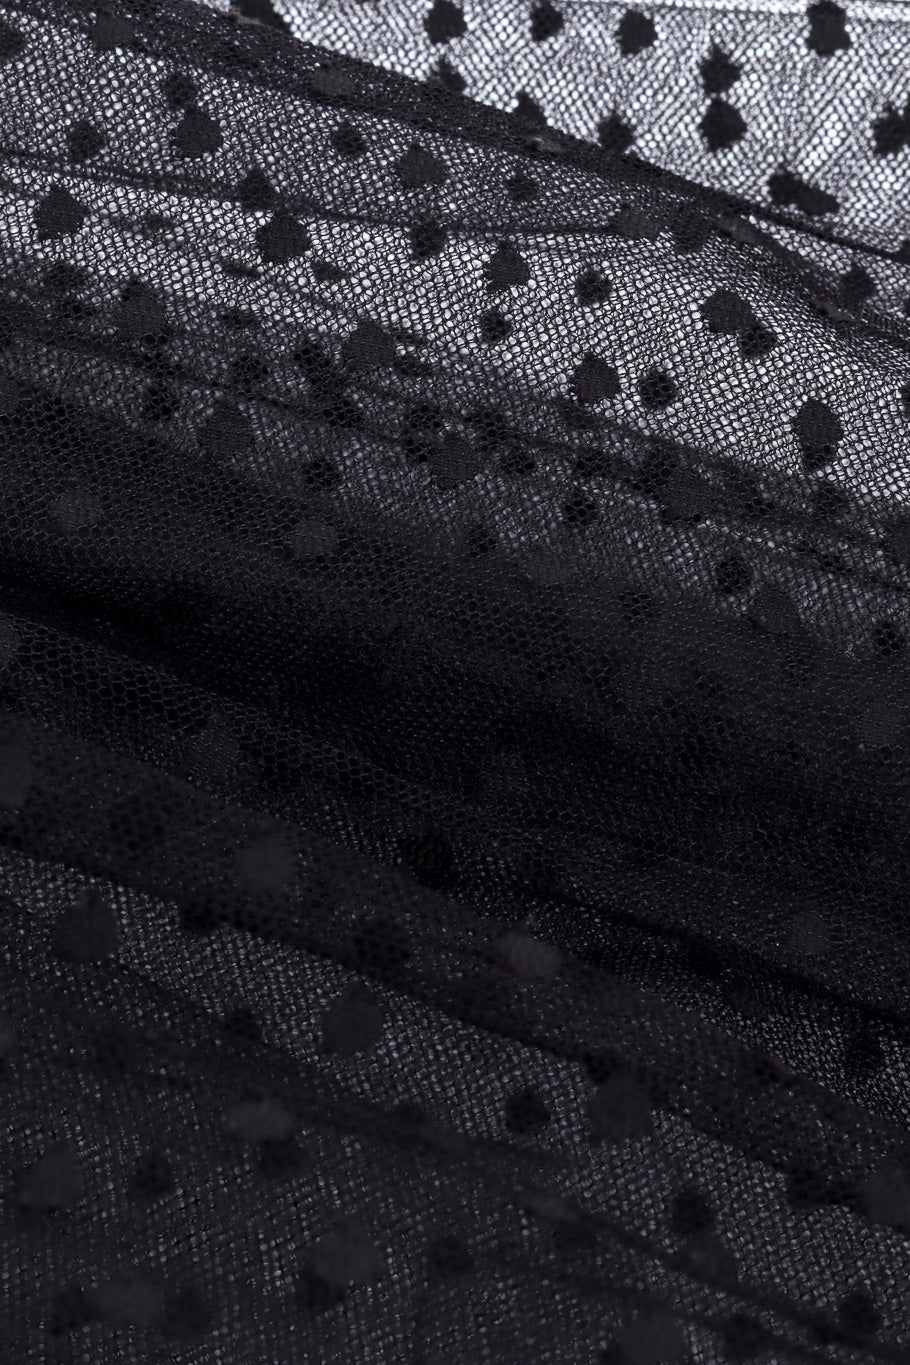 Vintage Bill Blass Polka Dot Tulle Skirt fabric closeup @recessla